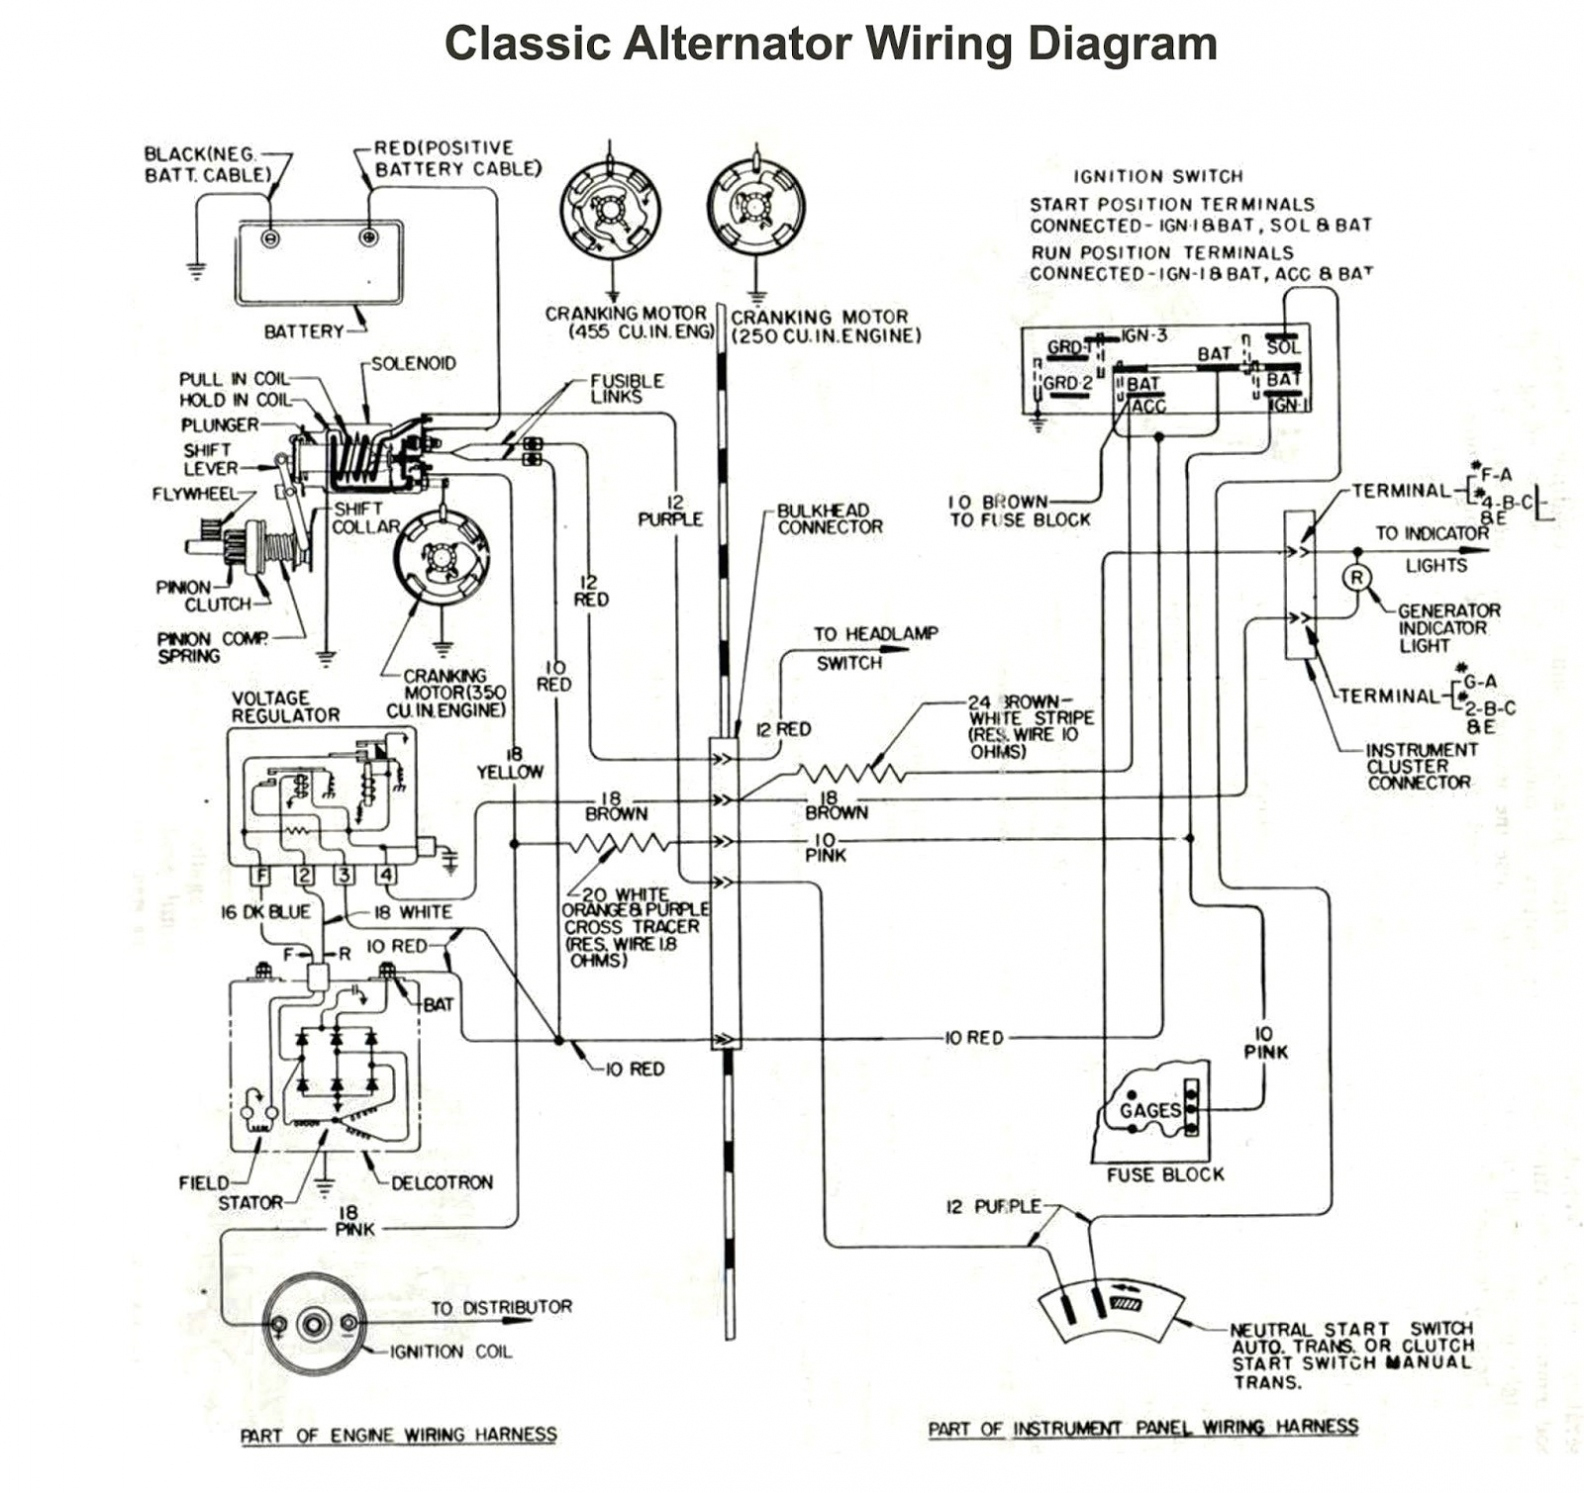 Print Wiring Diagram For Internally Regulated Alternator – Gm - Gm Alternator Wiring Diagram Internal Regulator